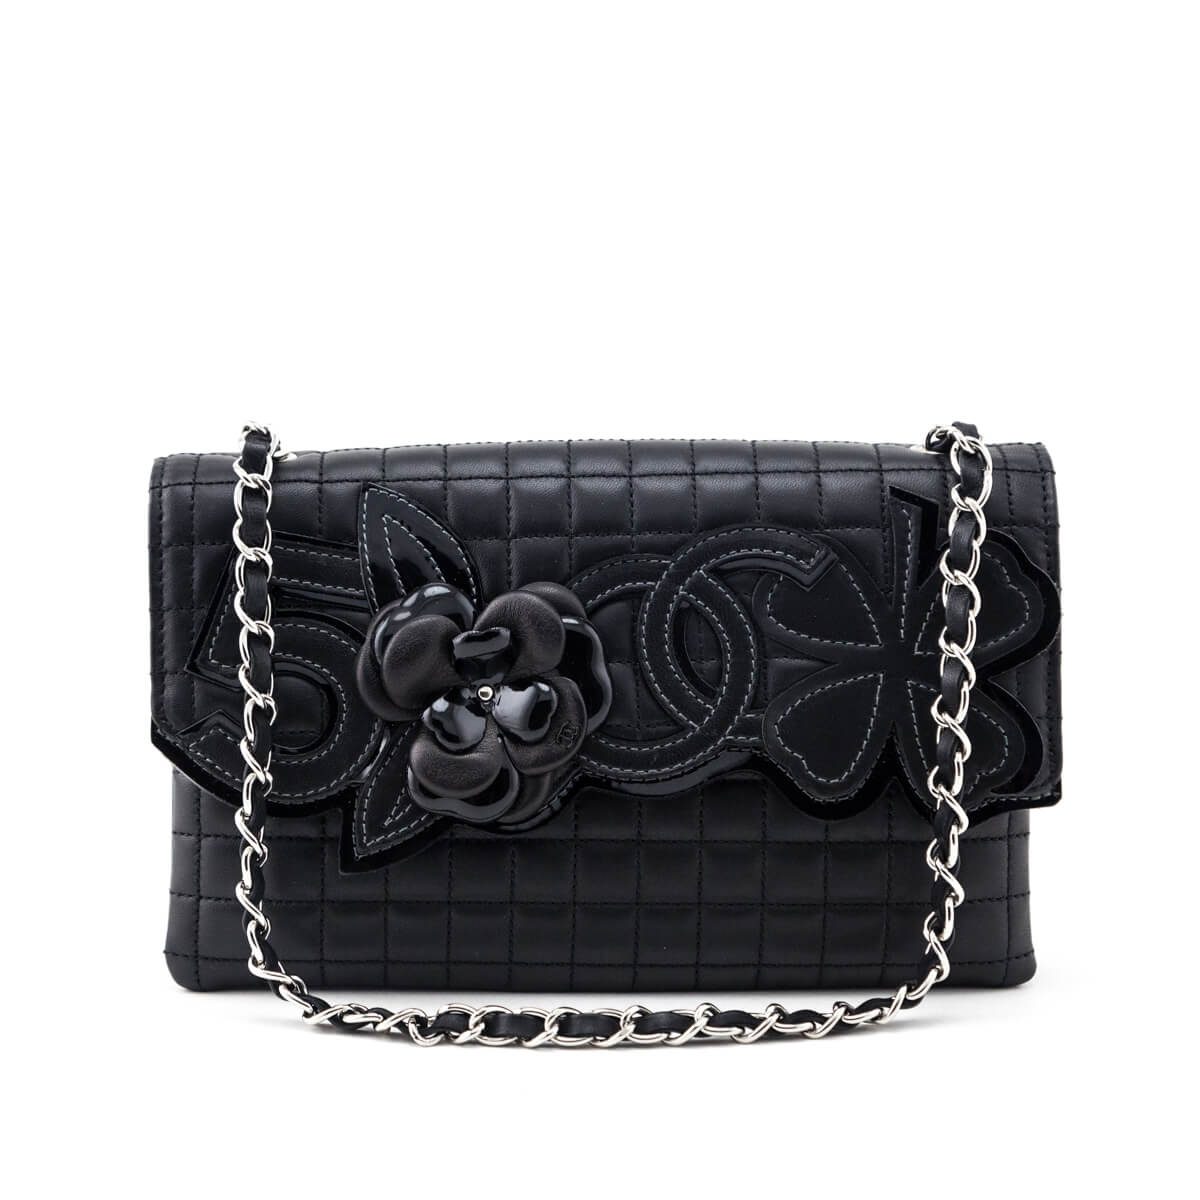 chanel black leather purse crossbody